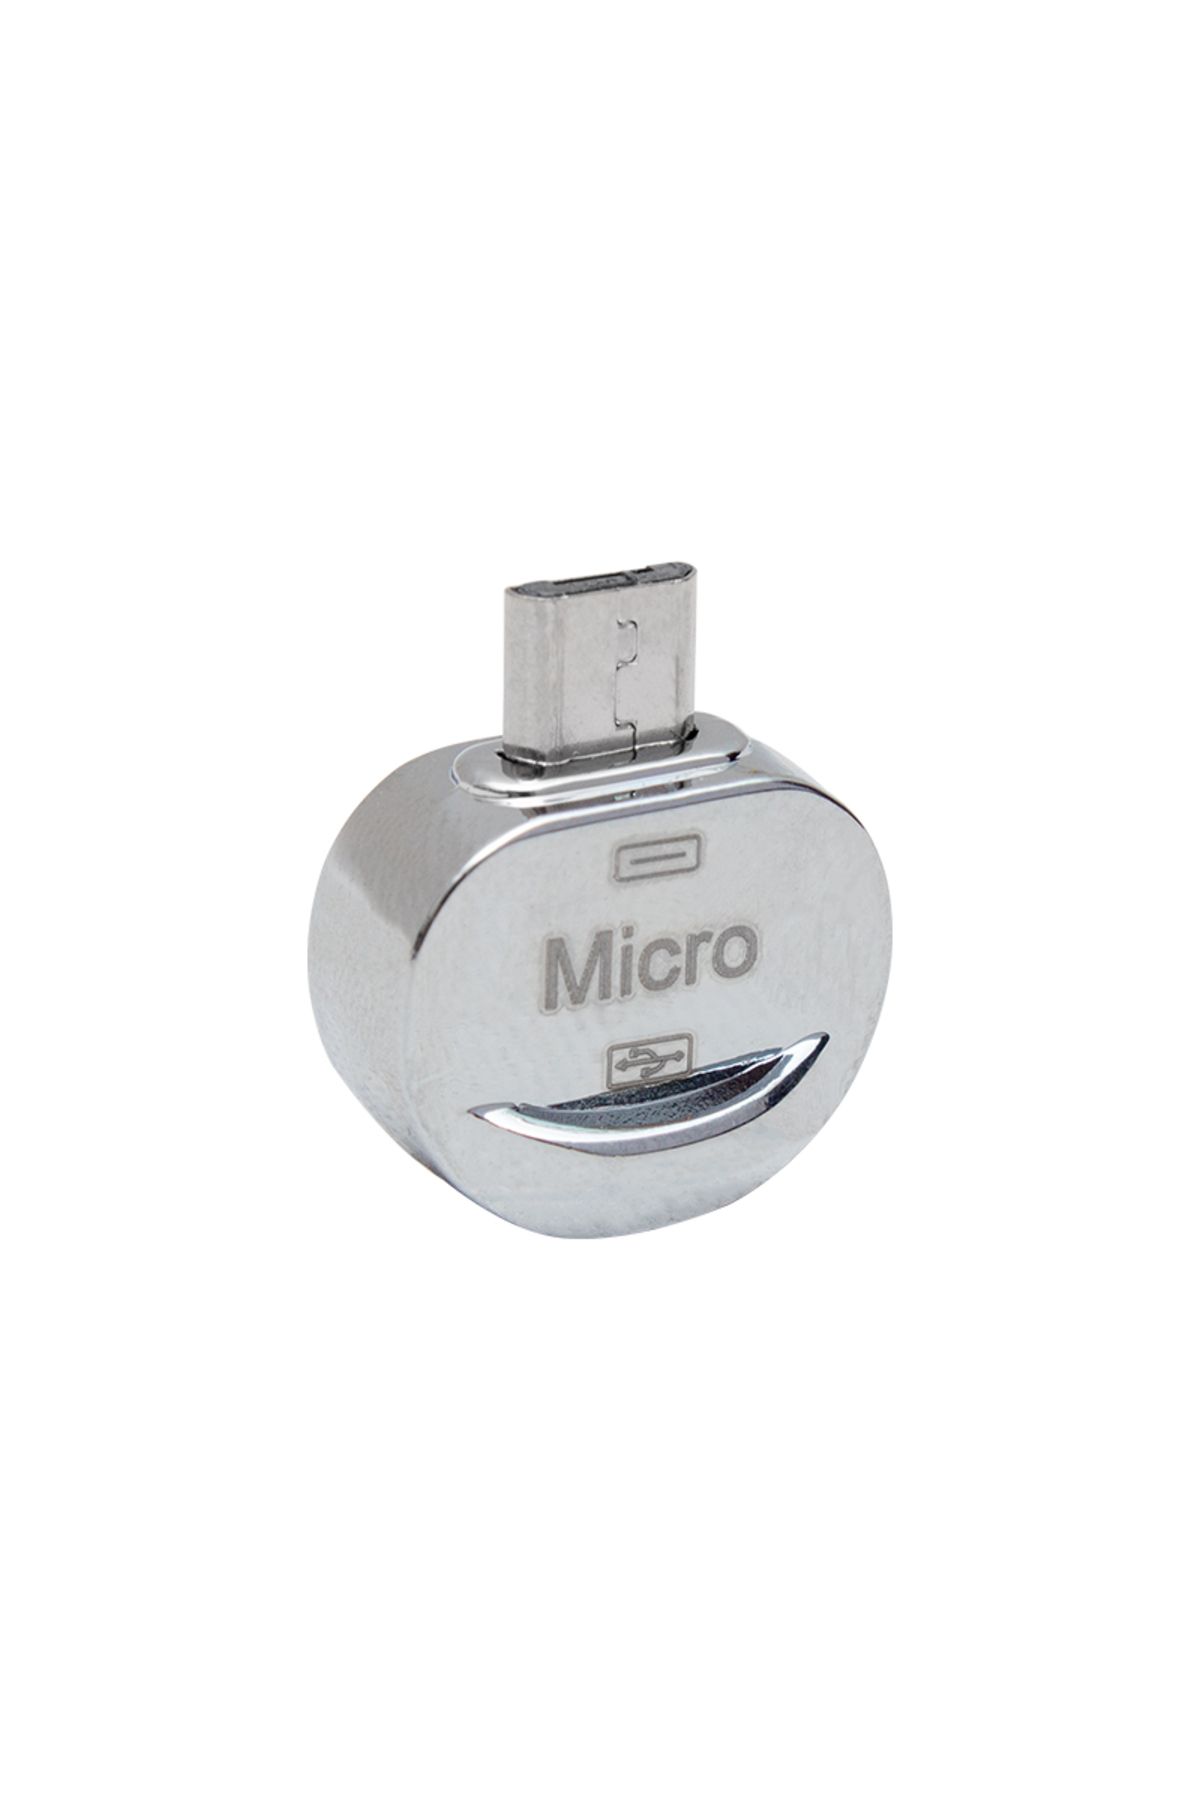 Soydoğan ShopZum MICRO USB TO USB OTG ÇEVİRİCİ (ALTI OVAL)